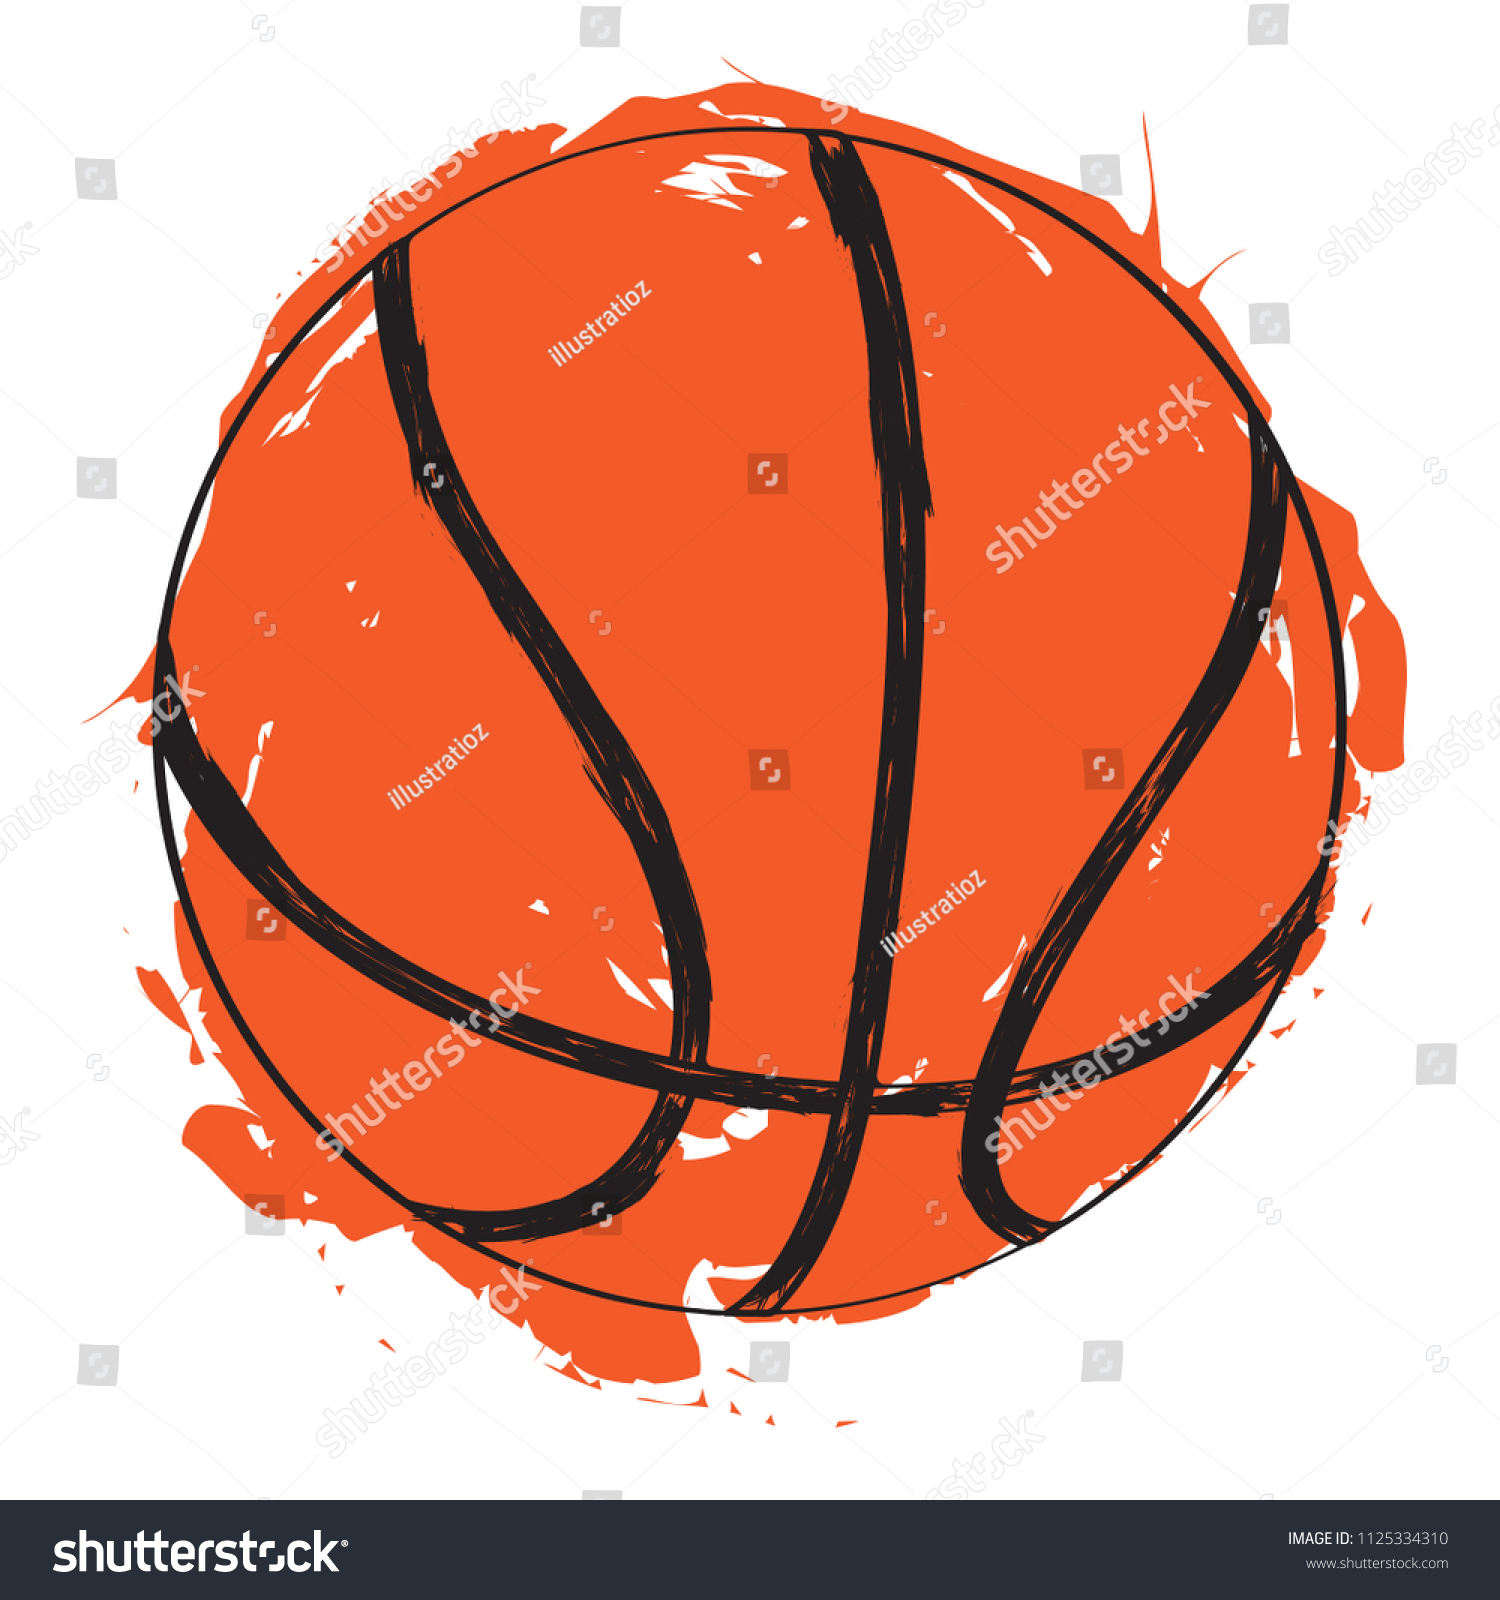 Баскетбольный мяч эскиз